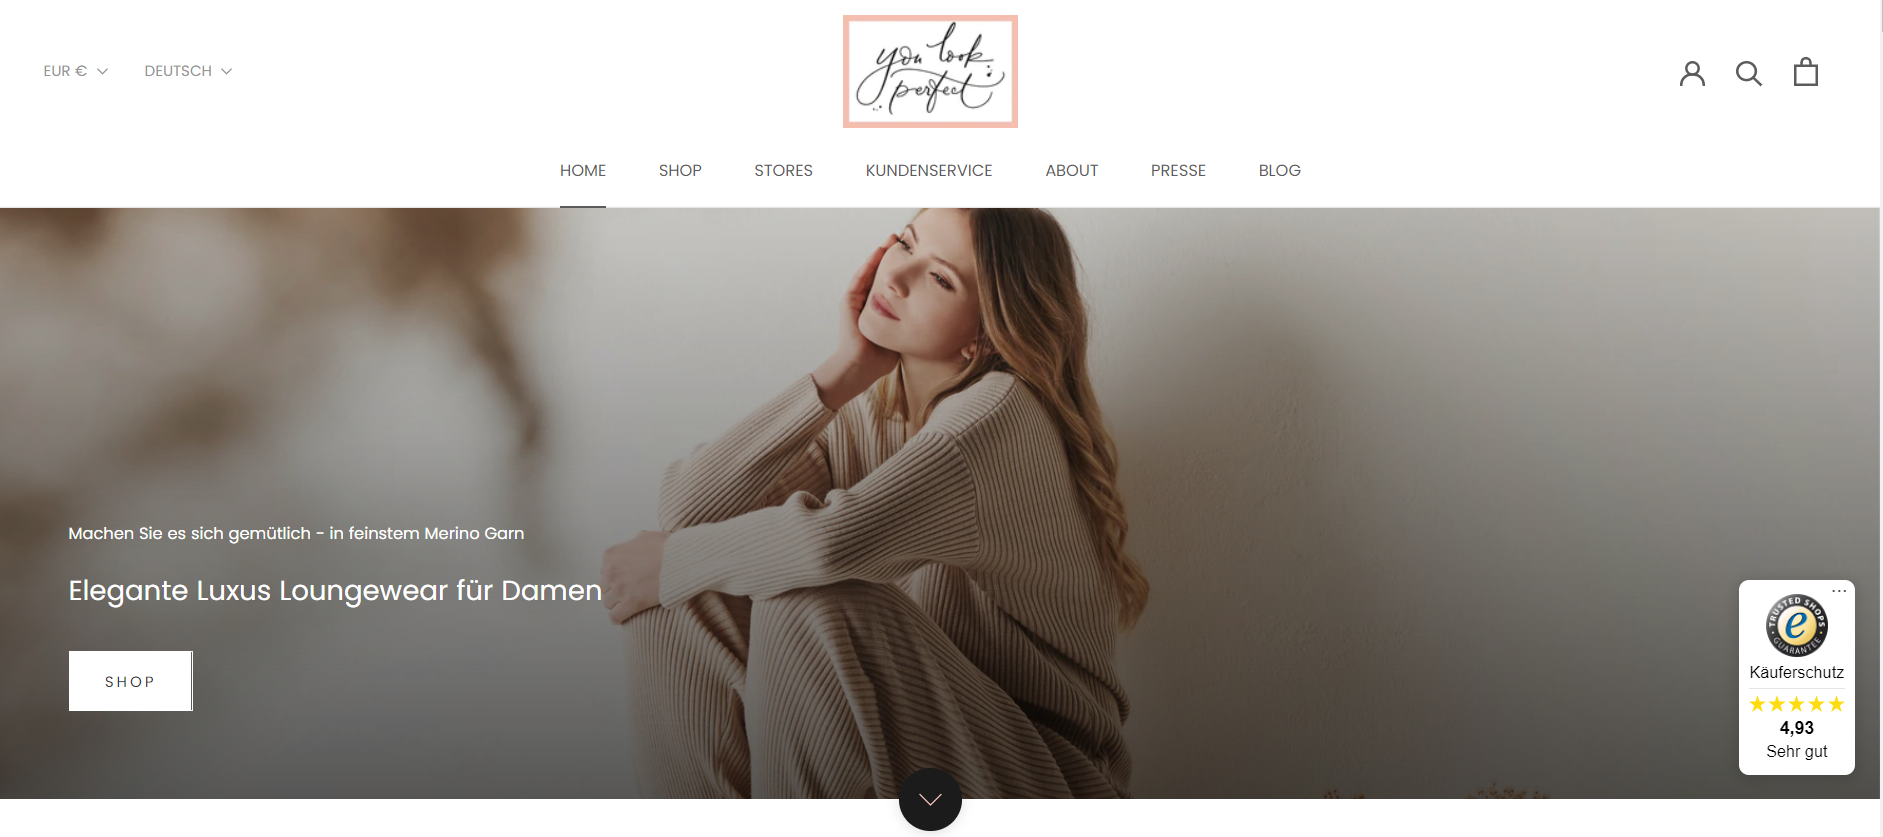 Die Website des Fashion E-Commerce YOU LOOK PERFECT.